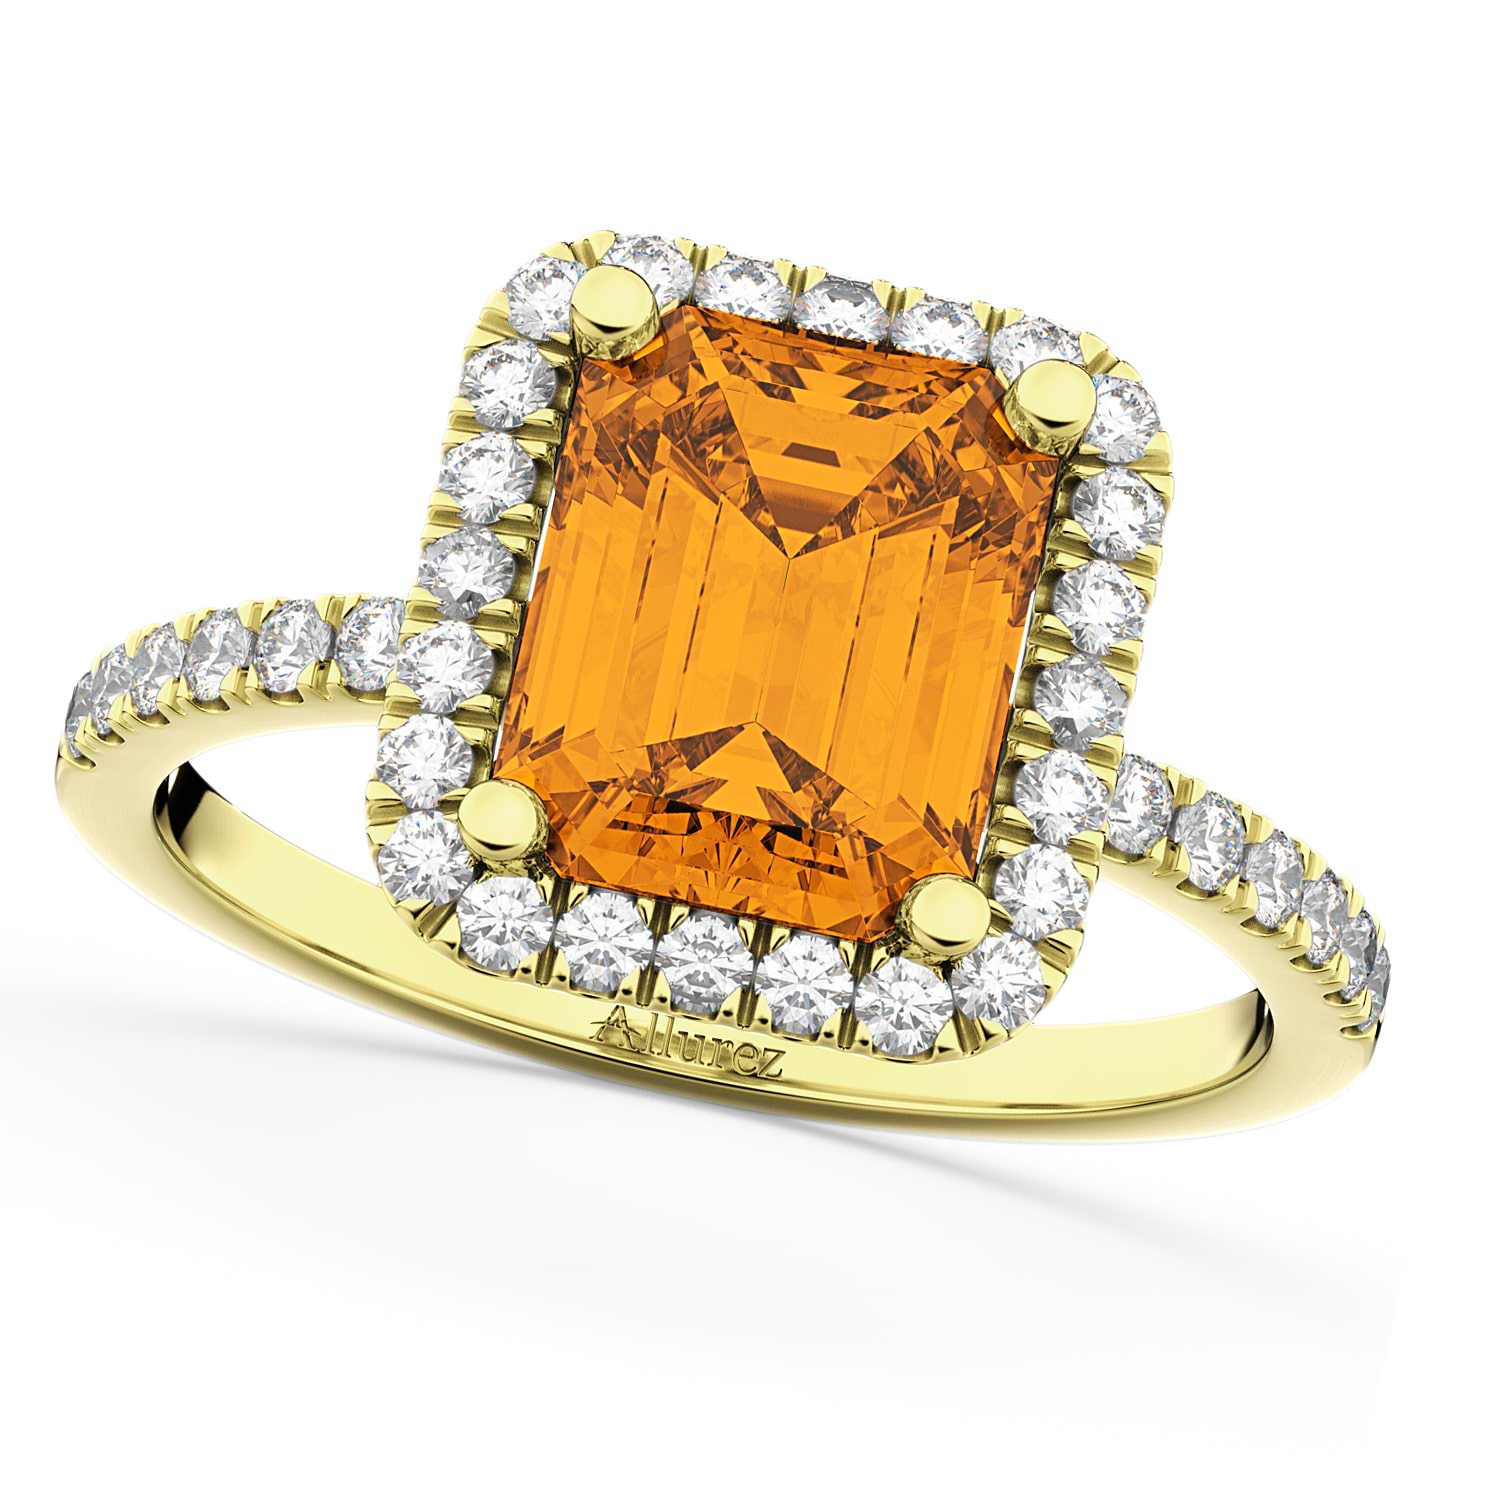 Emerald-Cut Citrine & Diamond Engagement Ring 14k Yellow Gold (3.32ct)